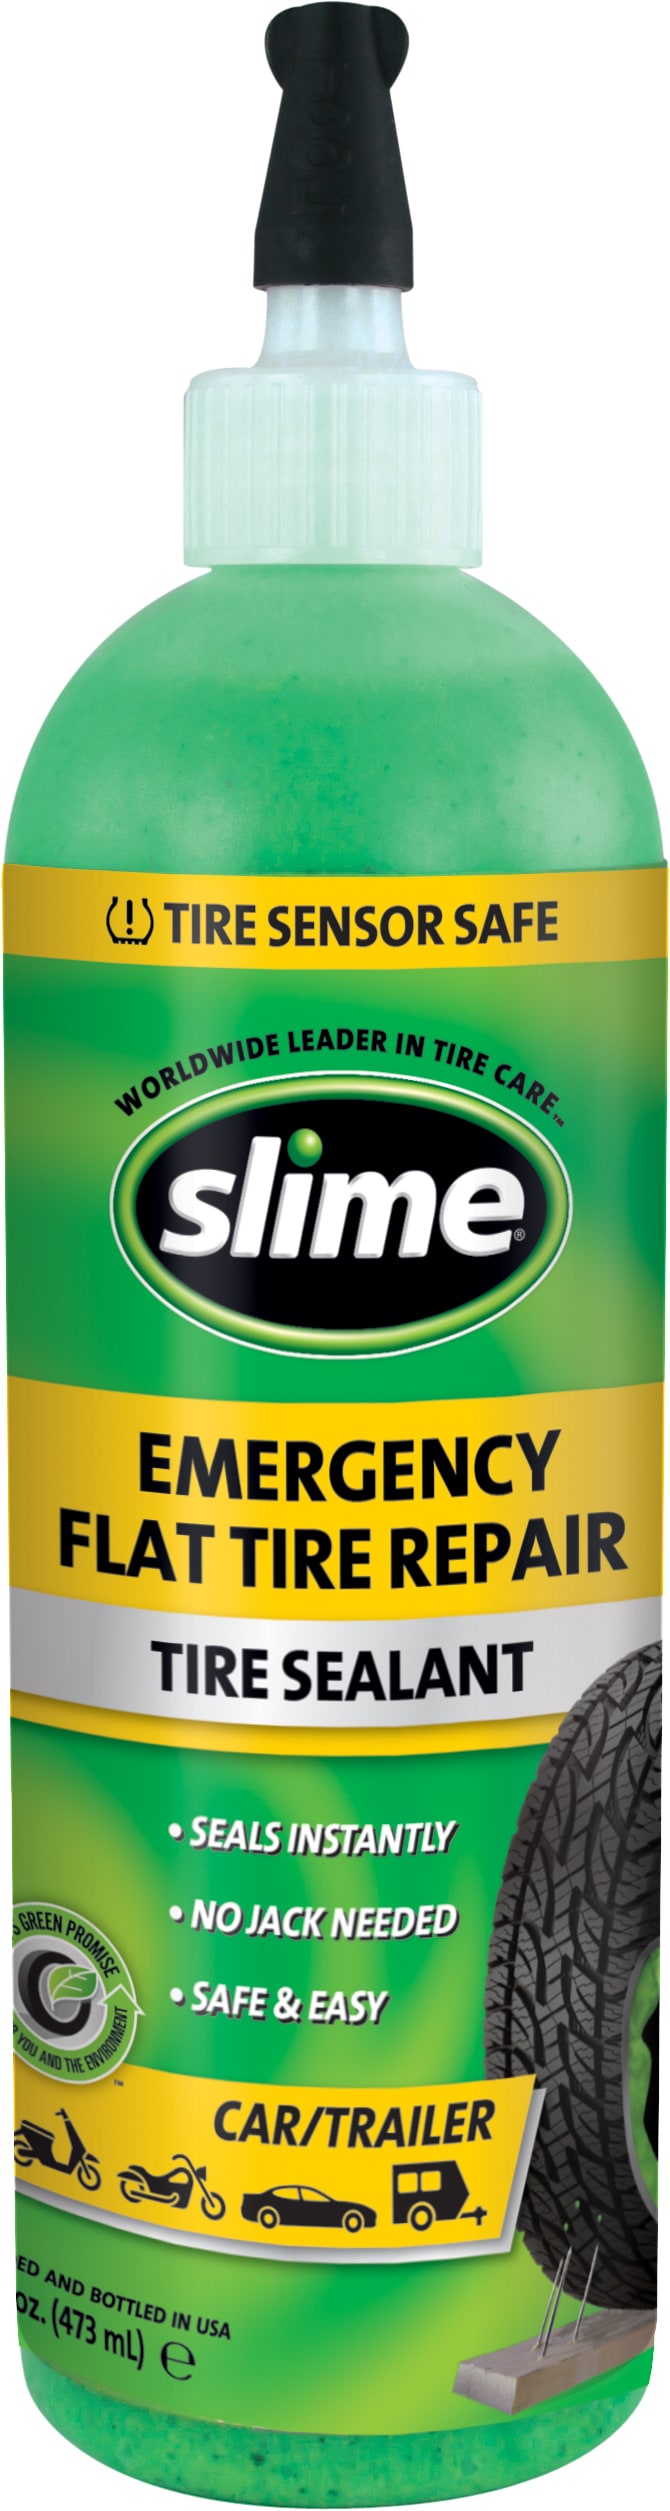 Slime 16-oz Pour Spout Tire Repair Sealant in the Tire Repair